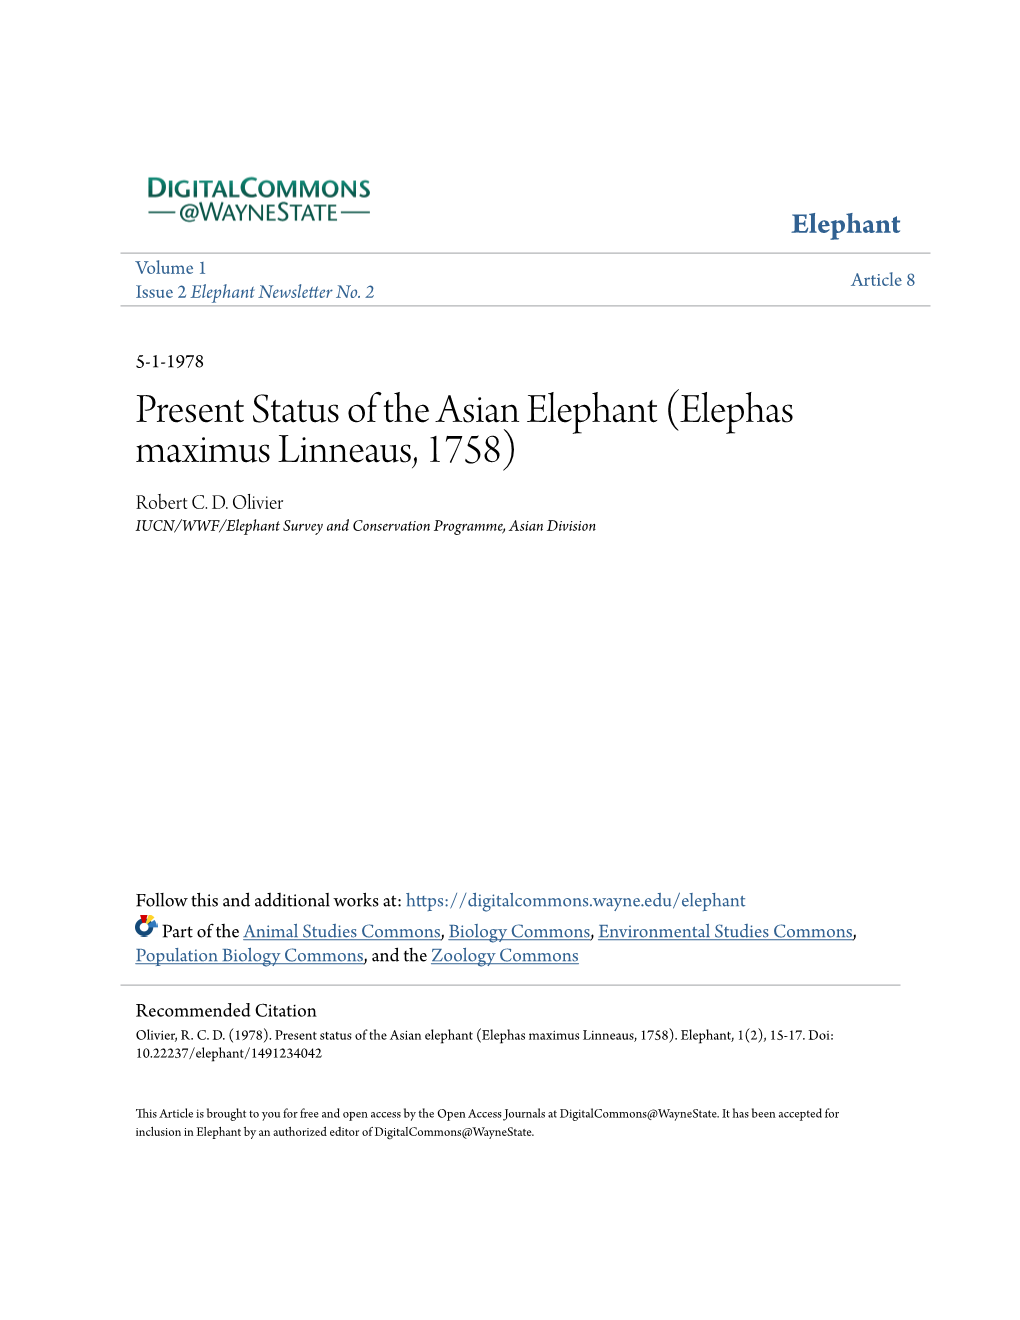 Present Status of the Asian Elephant (Elephas Maximus Linneaus, 1758) Robert C